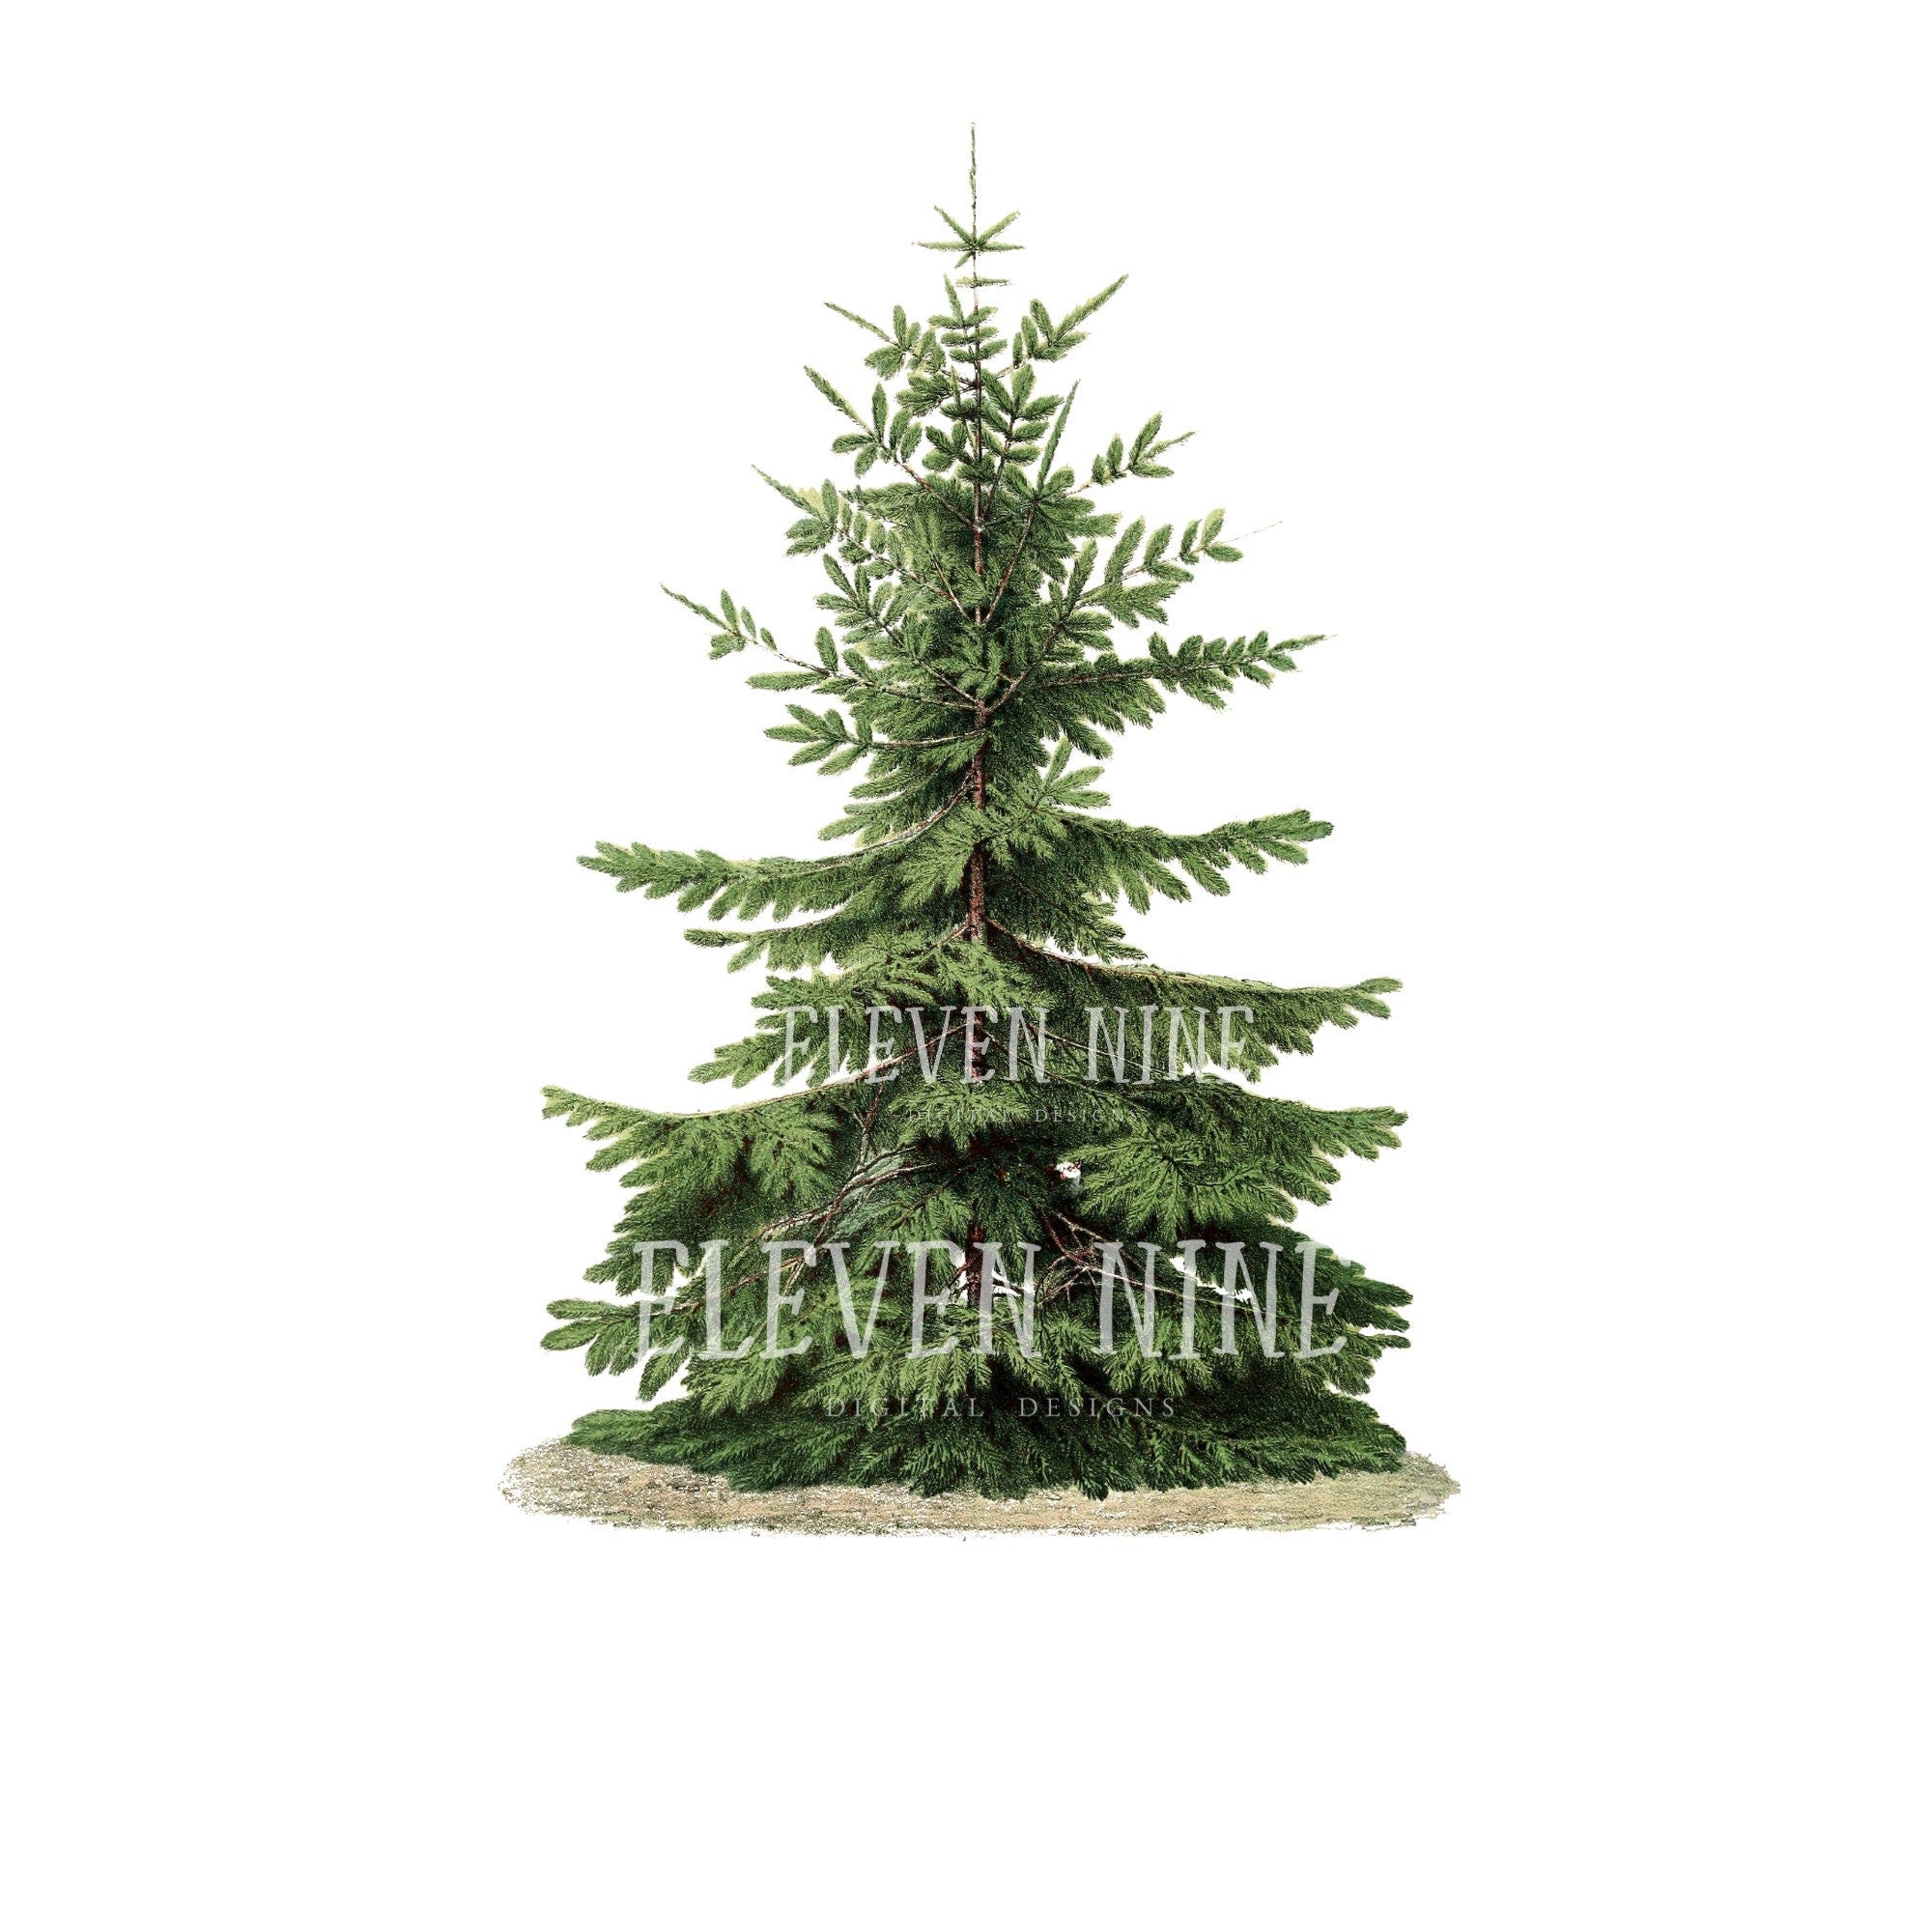 Christmas Tree Clipart, Tree Clipart, Tree Illustration, Vintage Tree, Nature Clipart, Christmas Tree PNG JPG